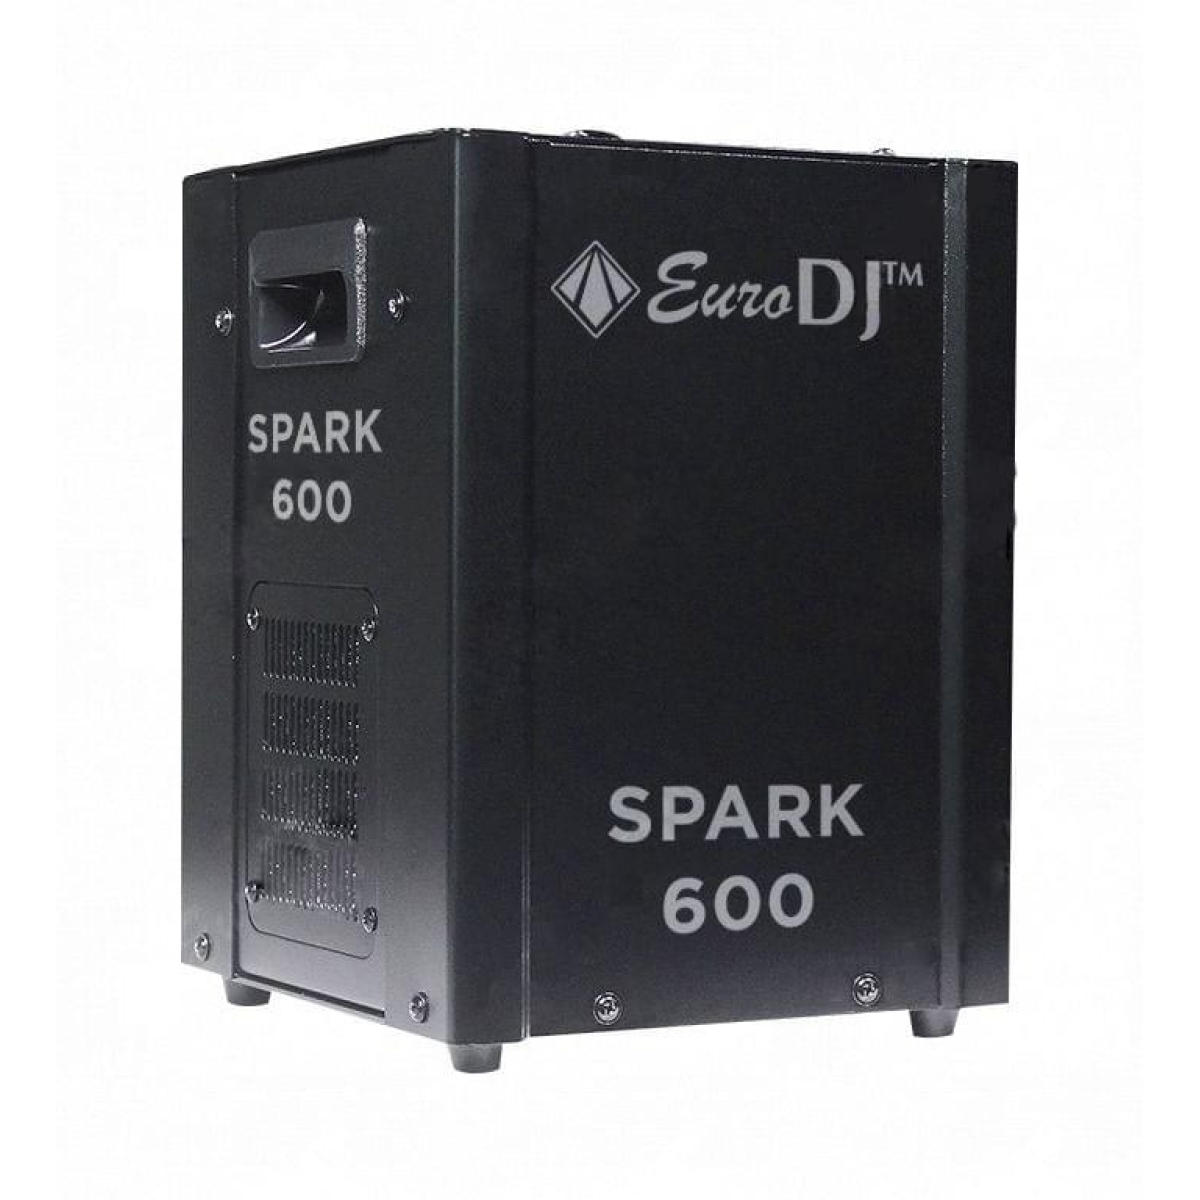 Другие спецэффекты Euro DJ Spark 600 led em 002 м 240v фейерверк шар с контрол 12 реж 4м 4м 4м 52 луча 2 кор